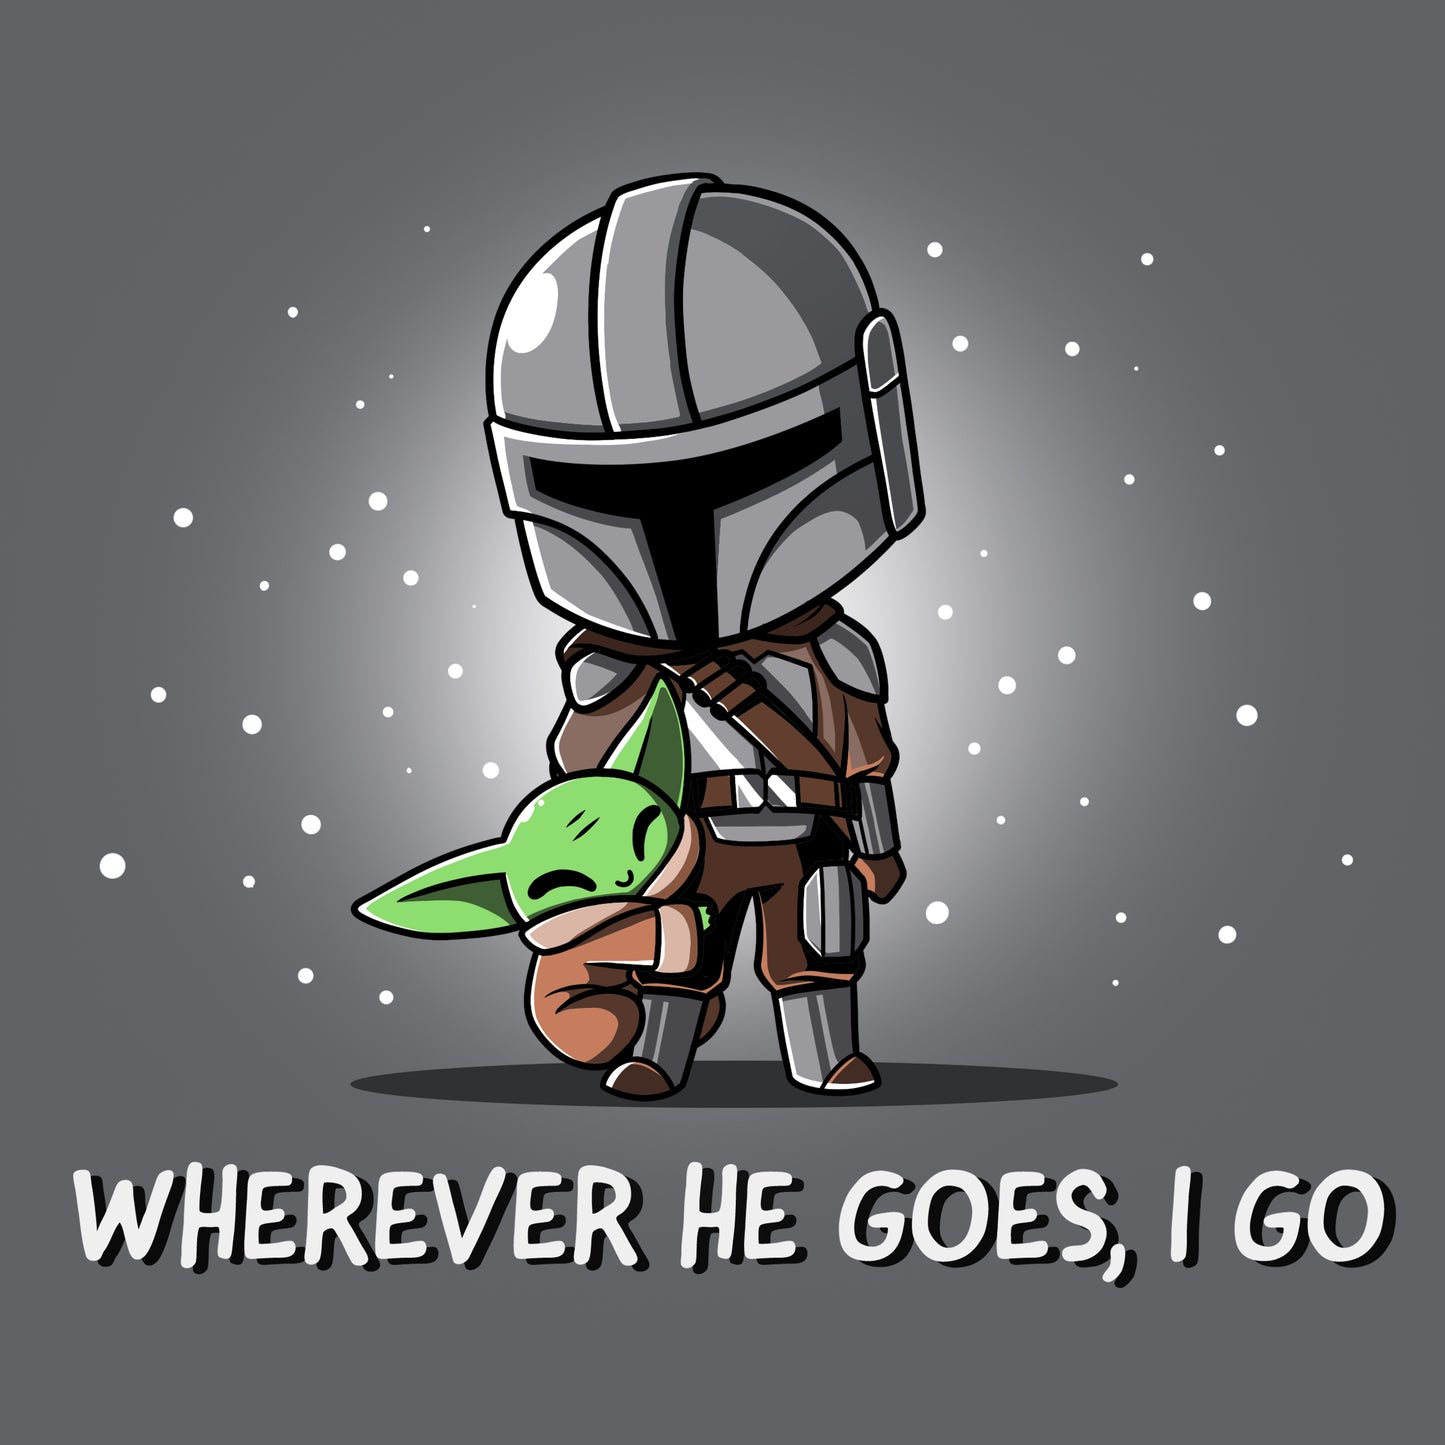 A Mandalorian Star Wars Wherever He Goes, I Go Yoda.